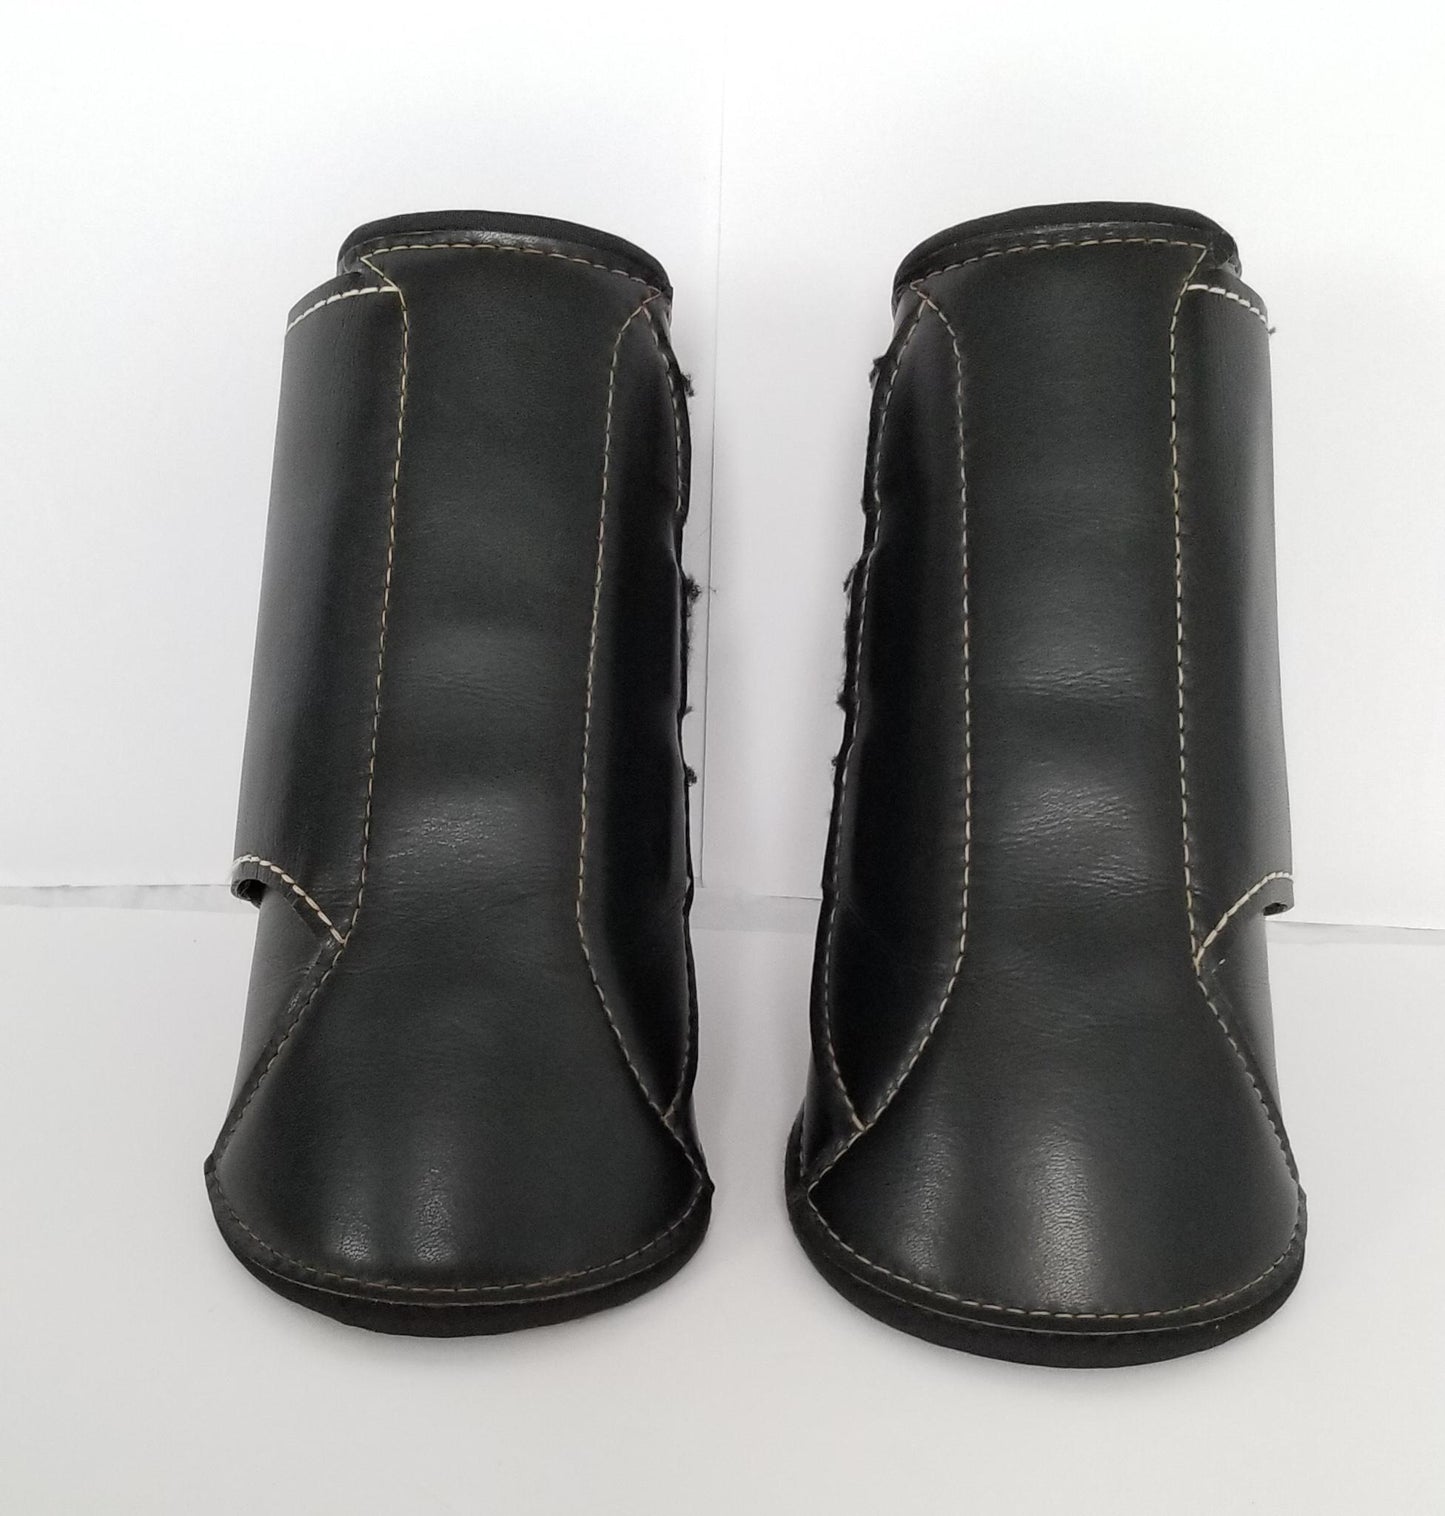 EquiFit MultiTeq Front and Short Hind Boots (Full Set) - Black - Large